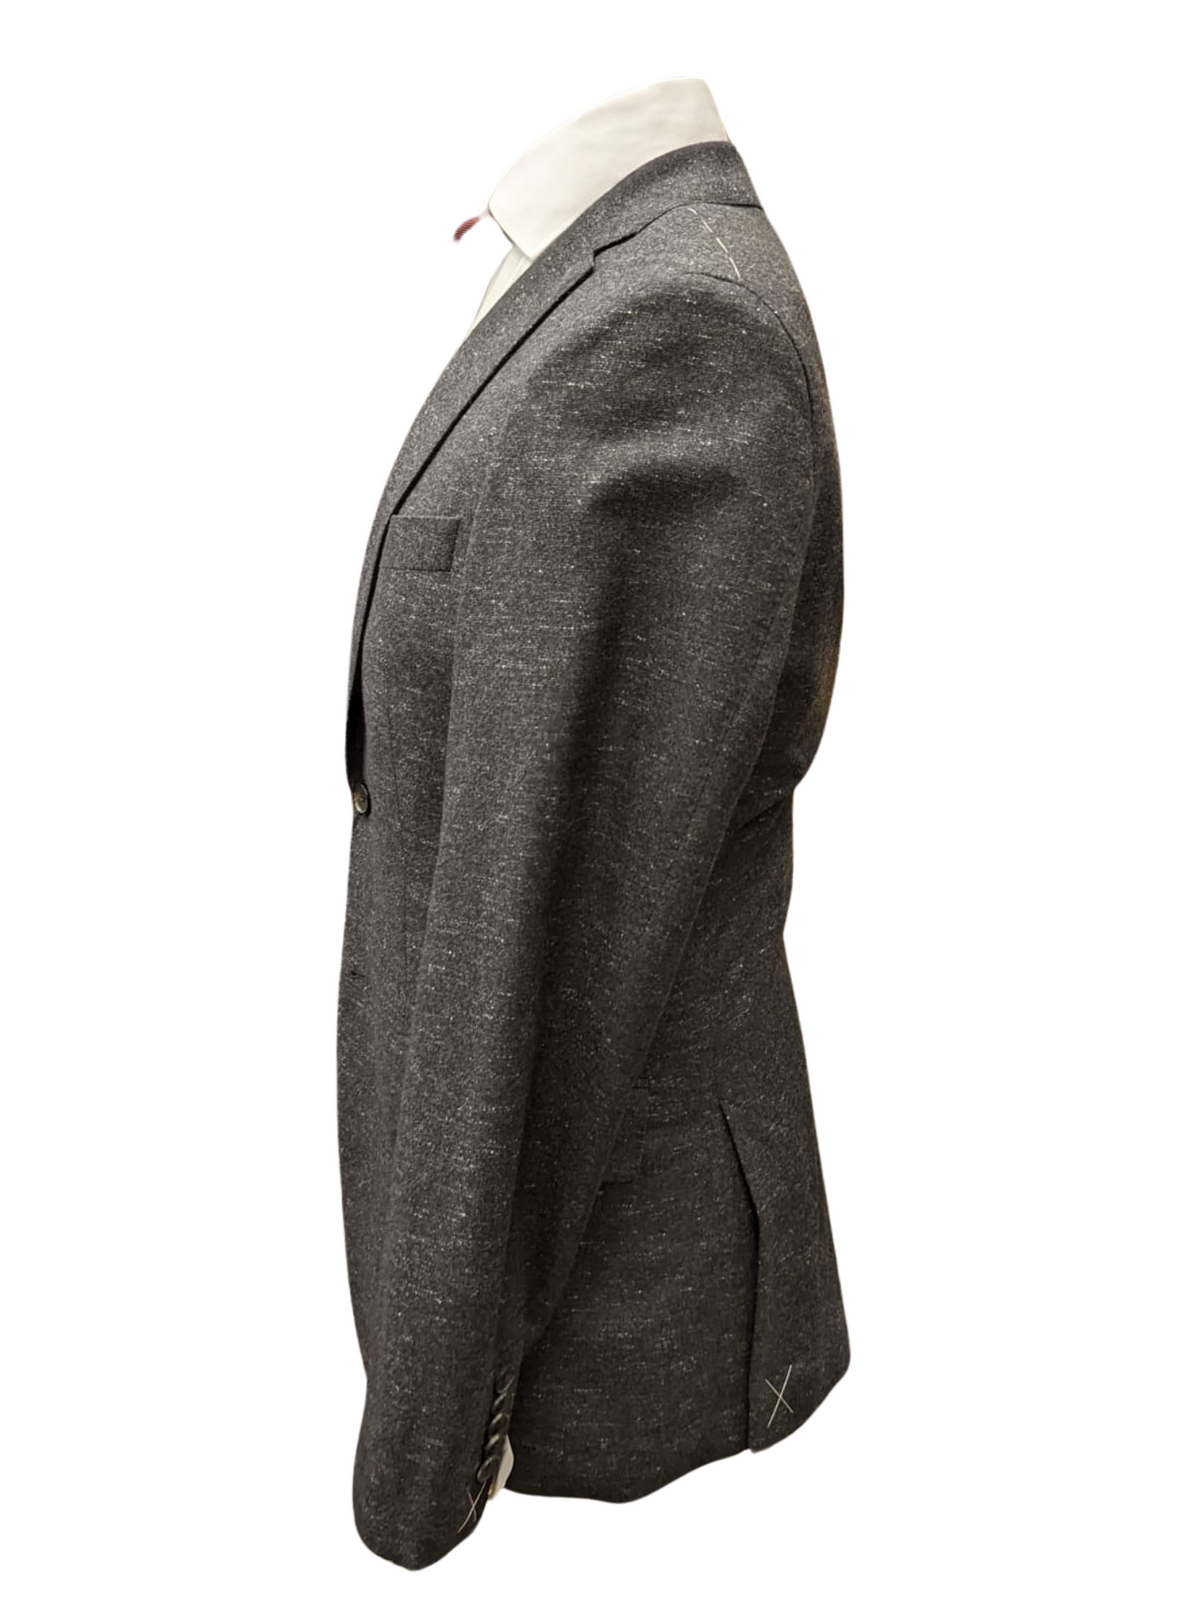 Hugo Boss Mens 38R Black Tailored Fit Wool Cashmere 2 Piece Suit